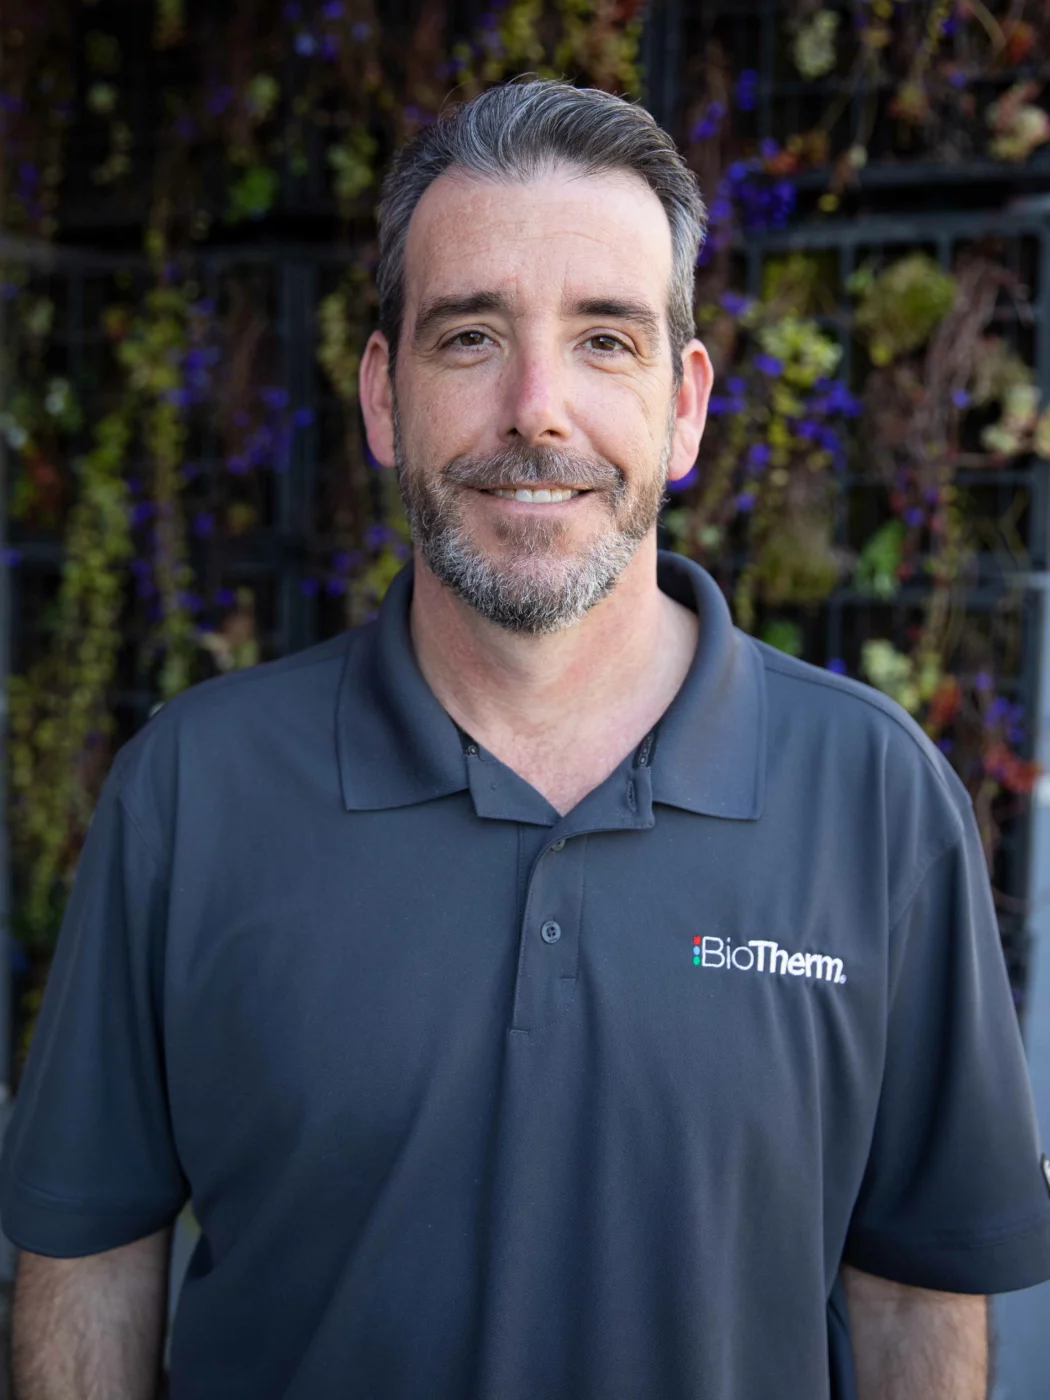 Kevin Strickland, miembro del personal de biotherm solutions